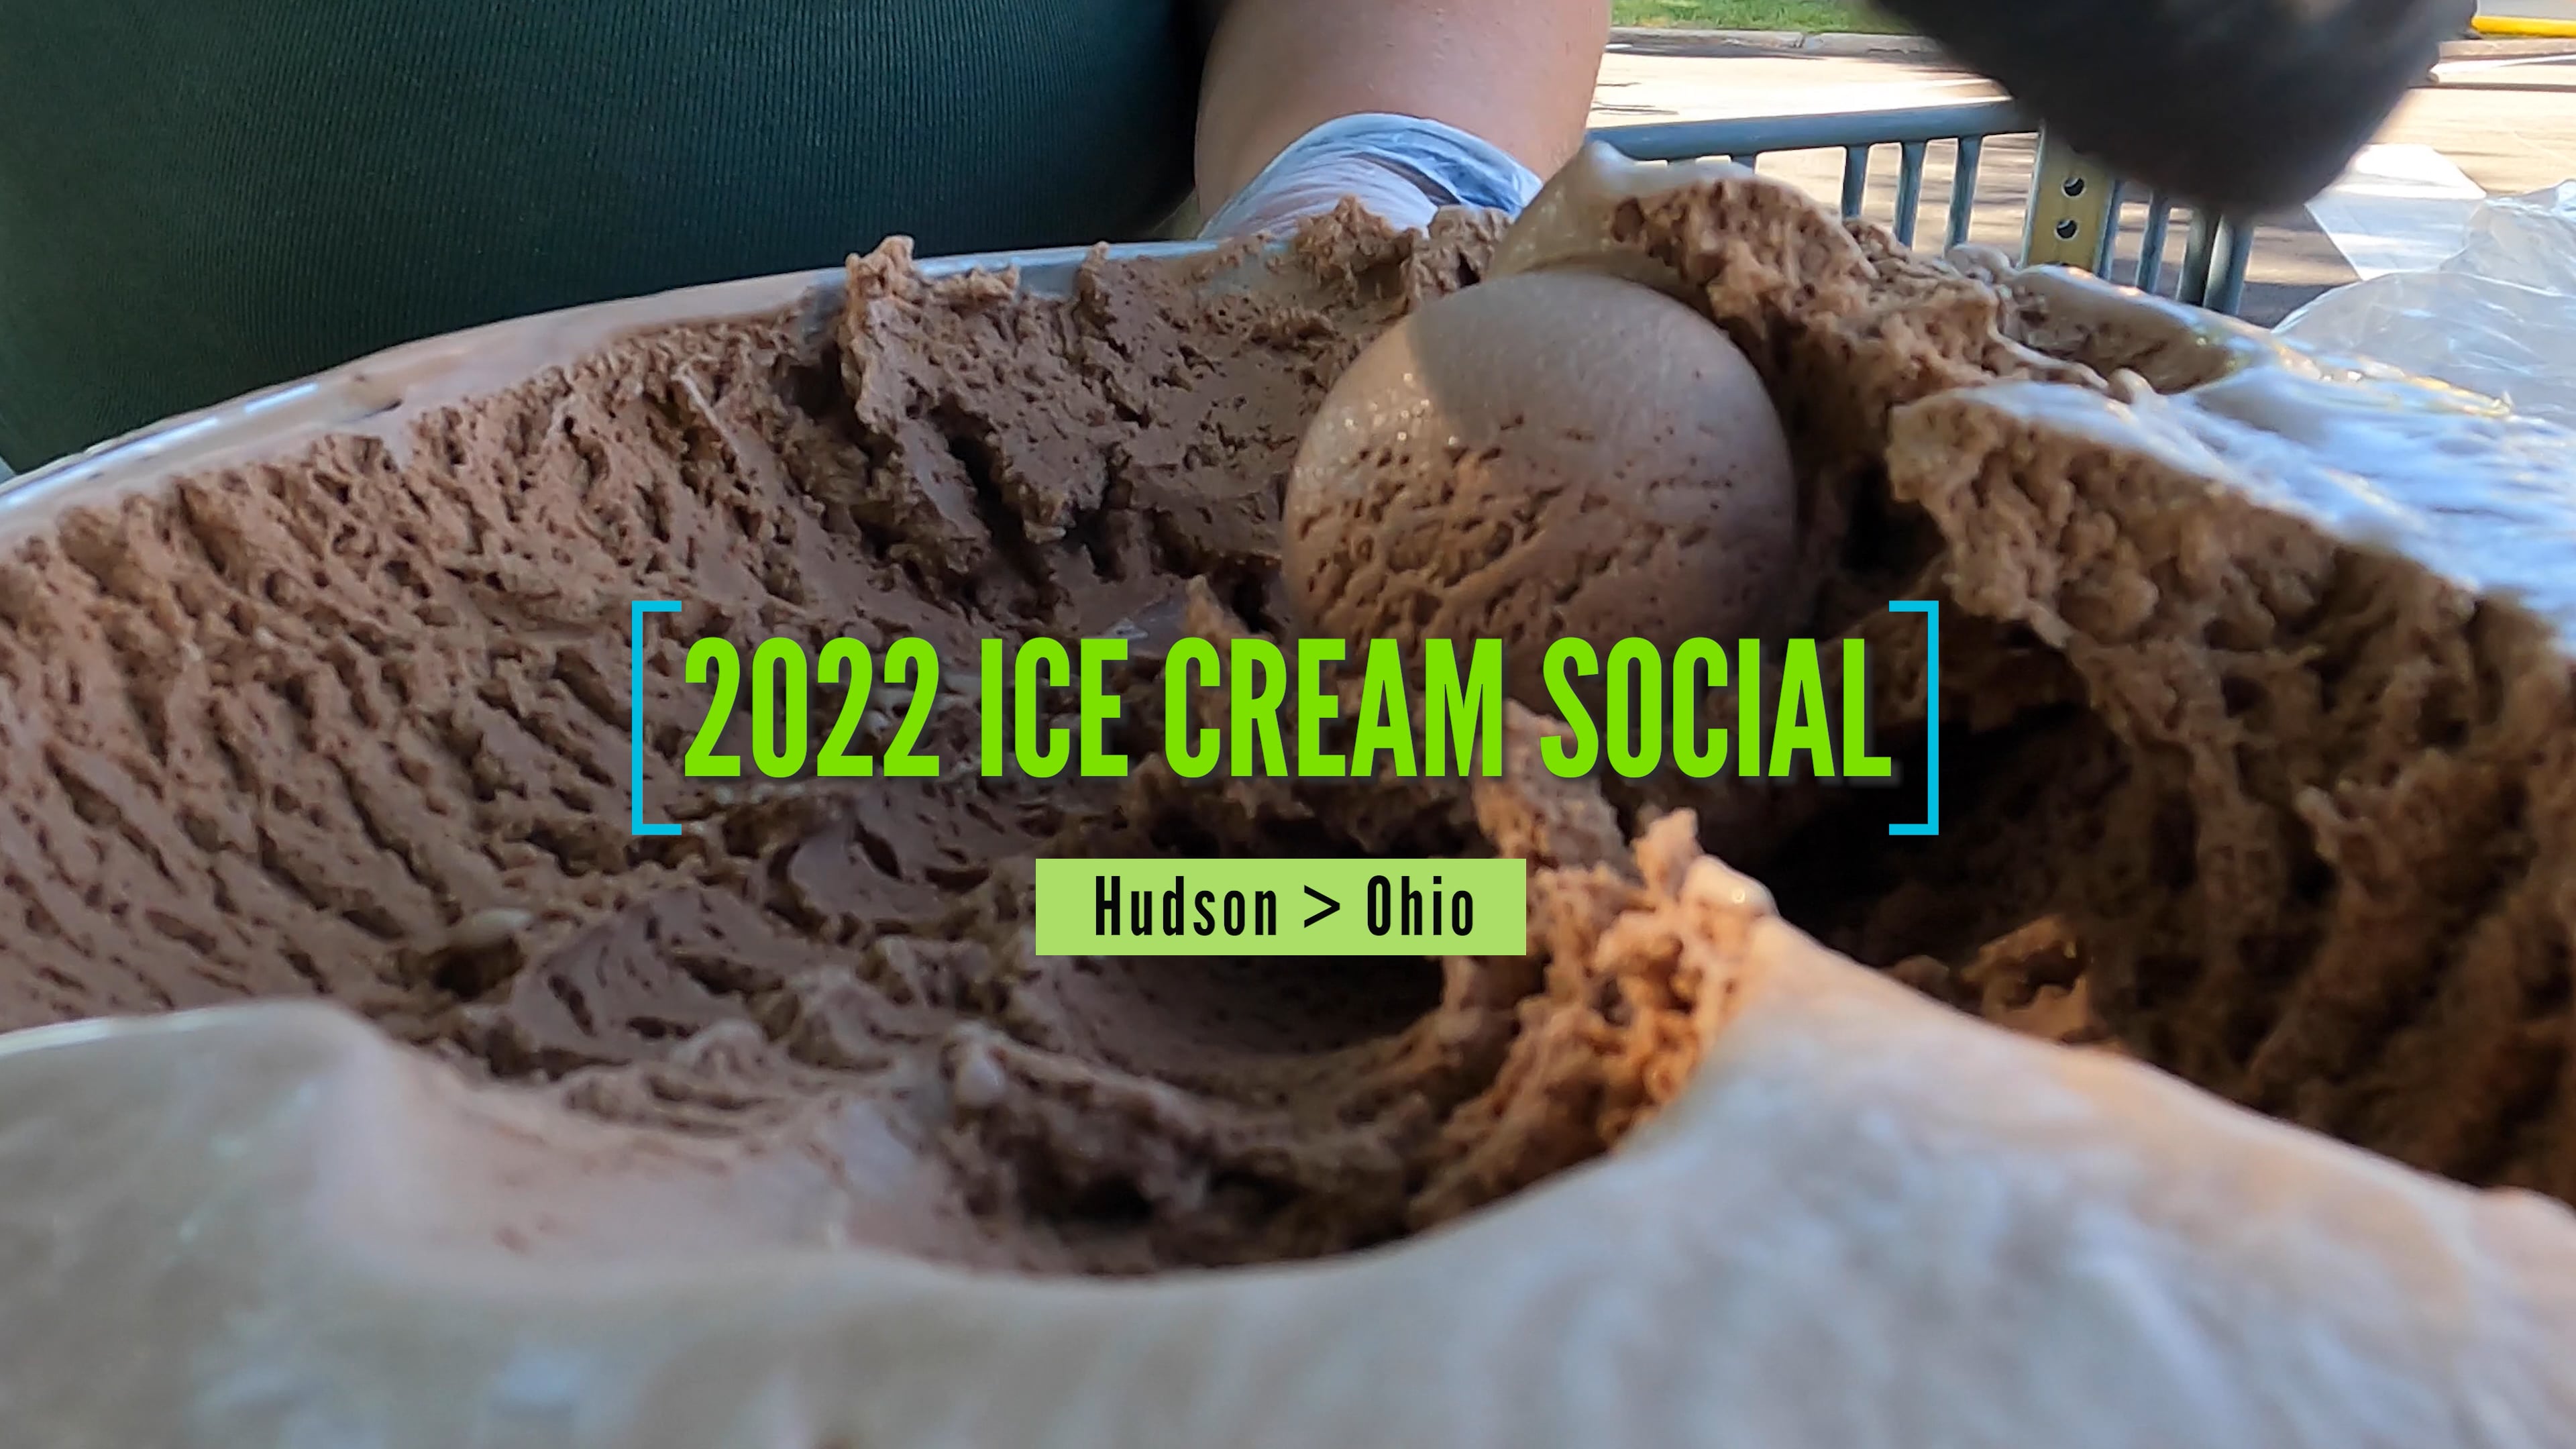 Hudson Ice Cream Social 2022